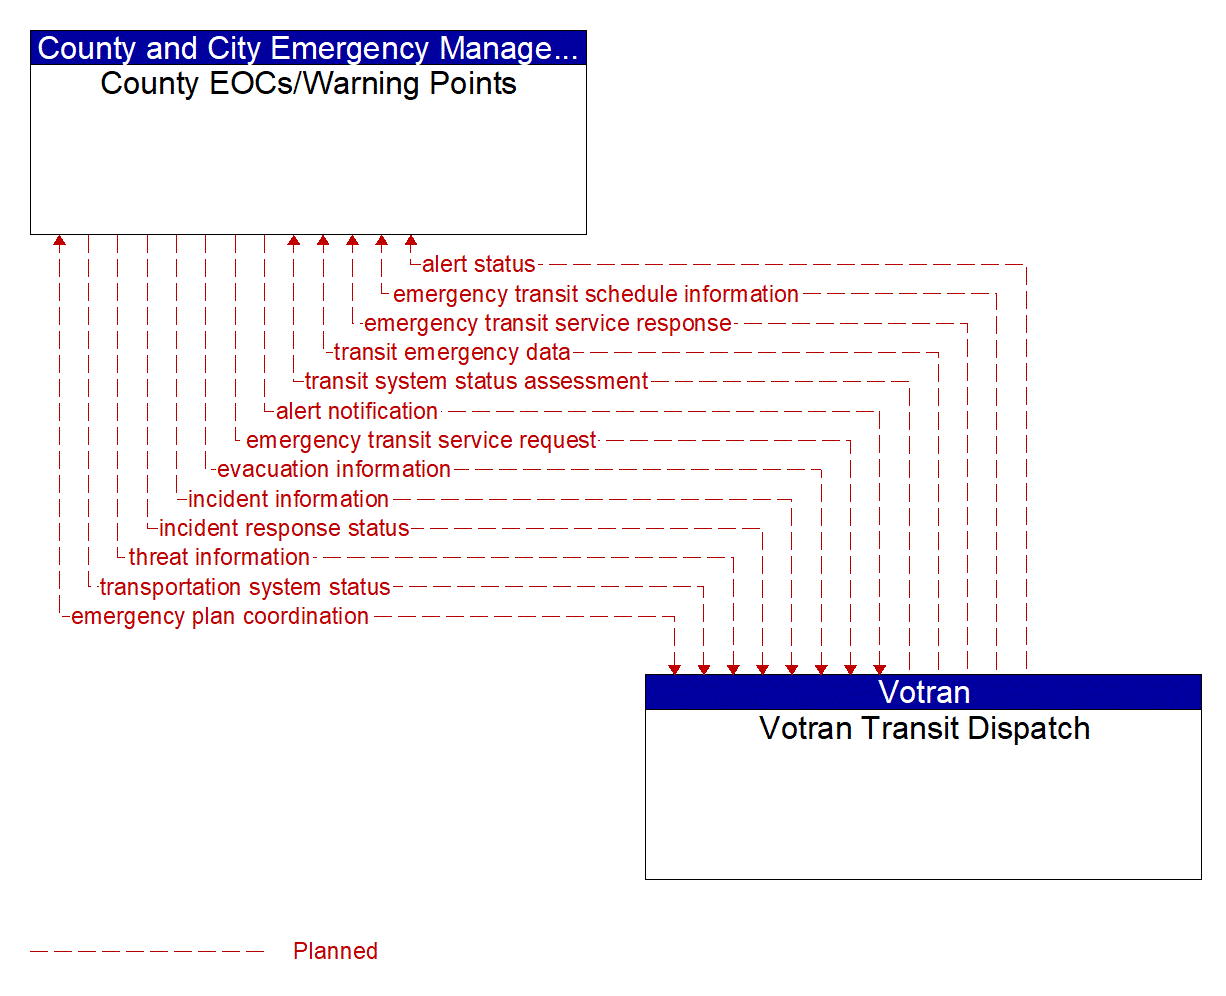 Architecture Flow Diagram: Votran Transit Dispatch <--> County EOCs/Warning Points